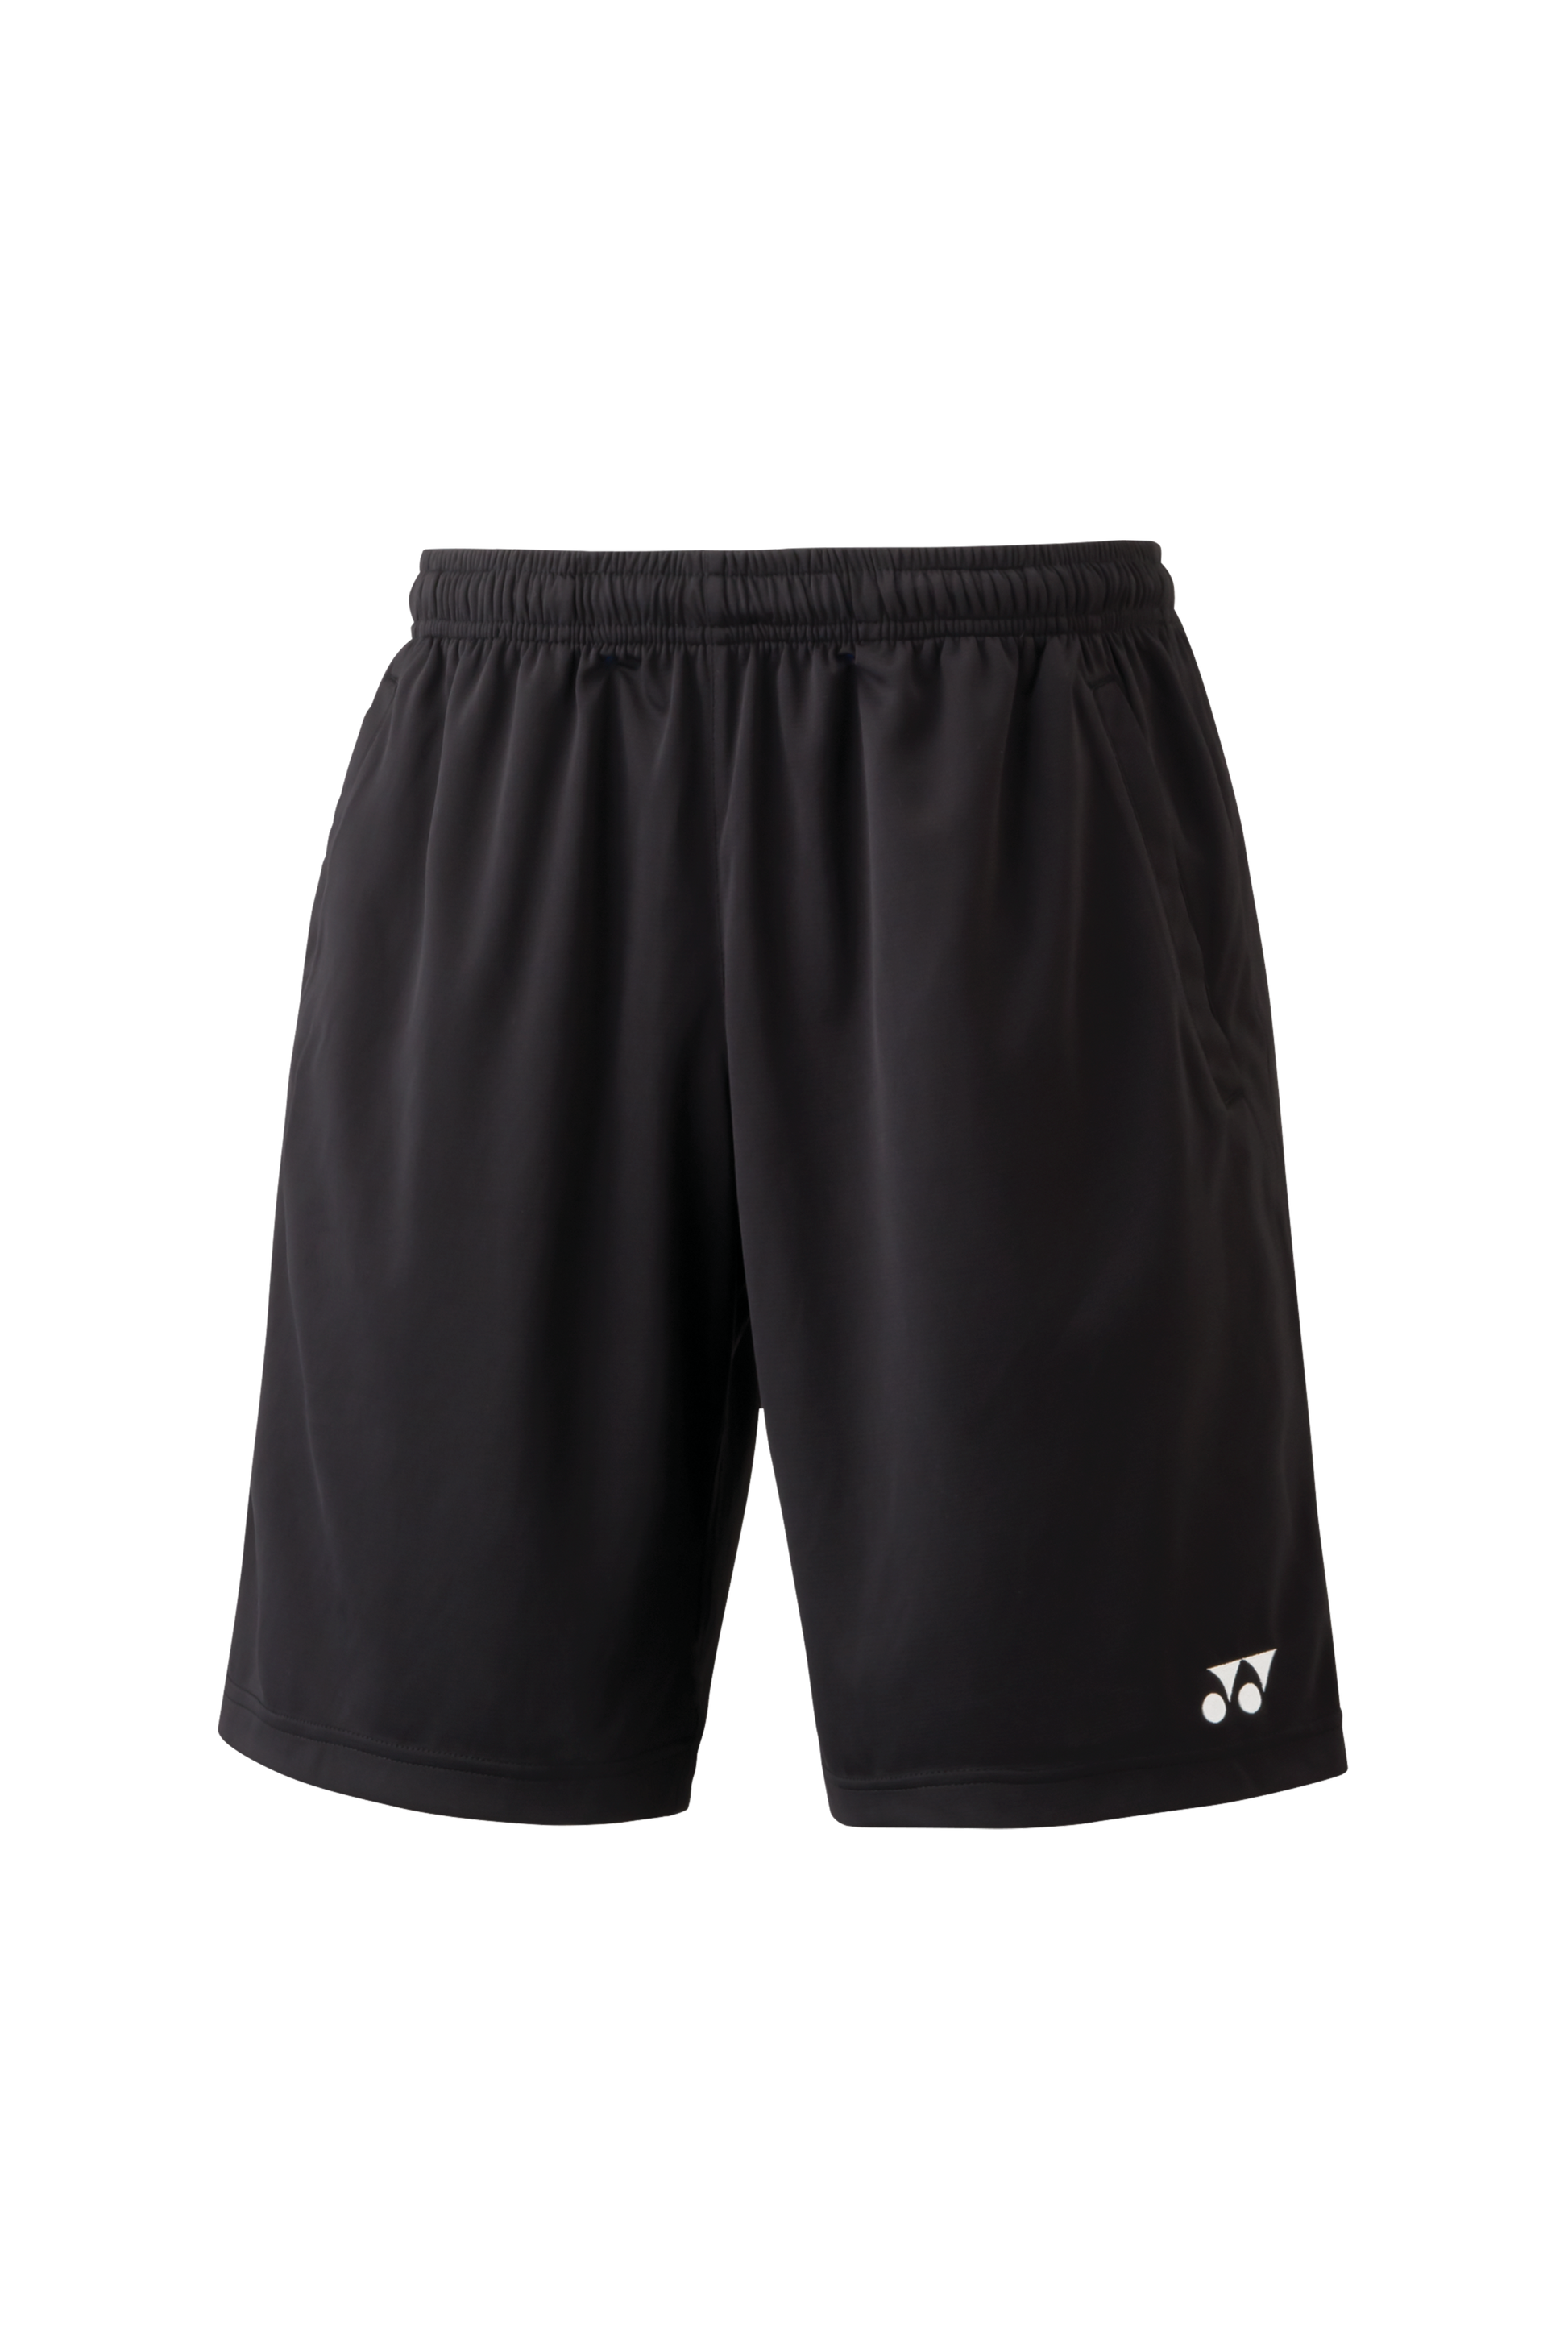 YONEX Men's Badminton Short YM0004 [Black] - Max Sports